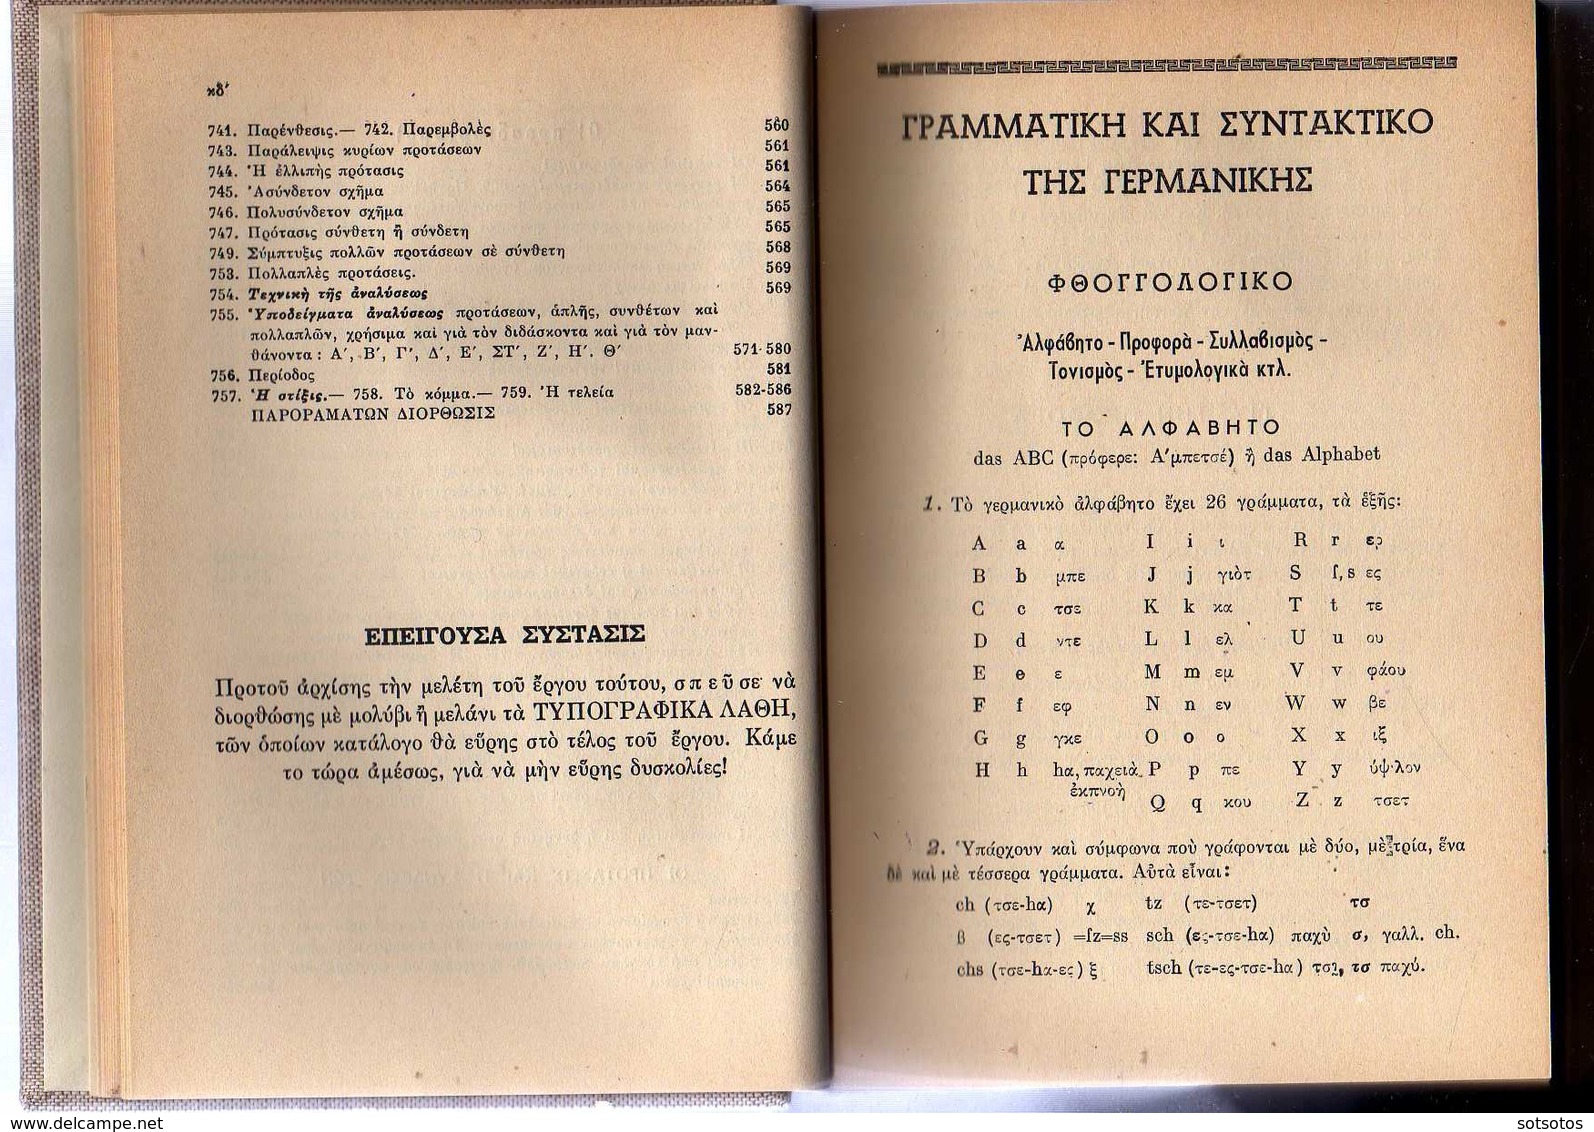 GREEK BOOK: Grammar and Writing of German Language - (1958) 592 pages - excellent condition  ΓΡΑΜΜΑΤΙΚΗ και ΣΥΝΤΑΚΤΙΚΟΝ